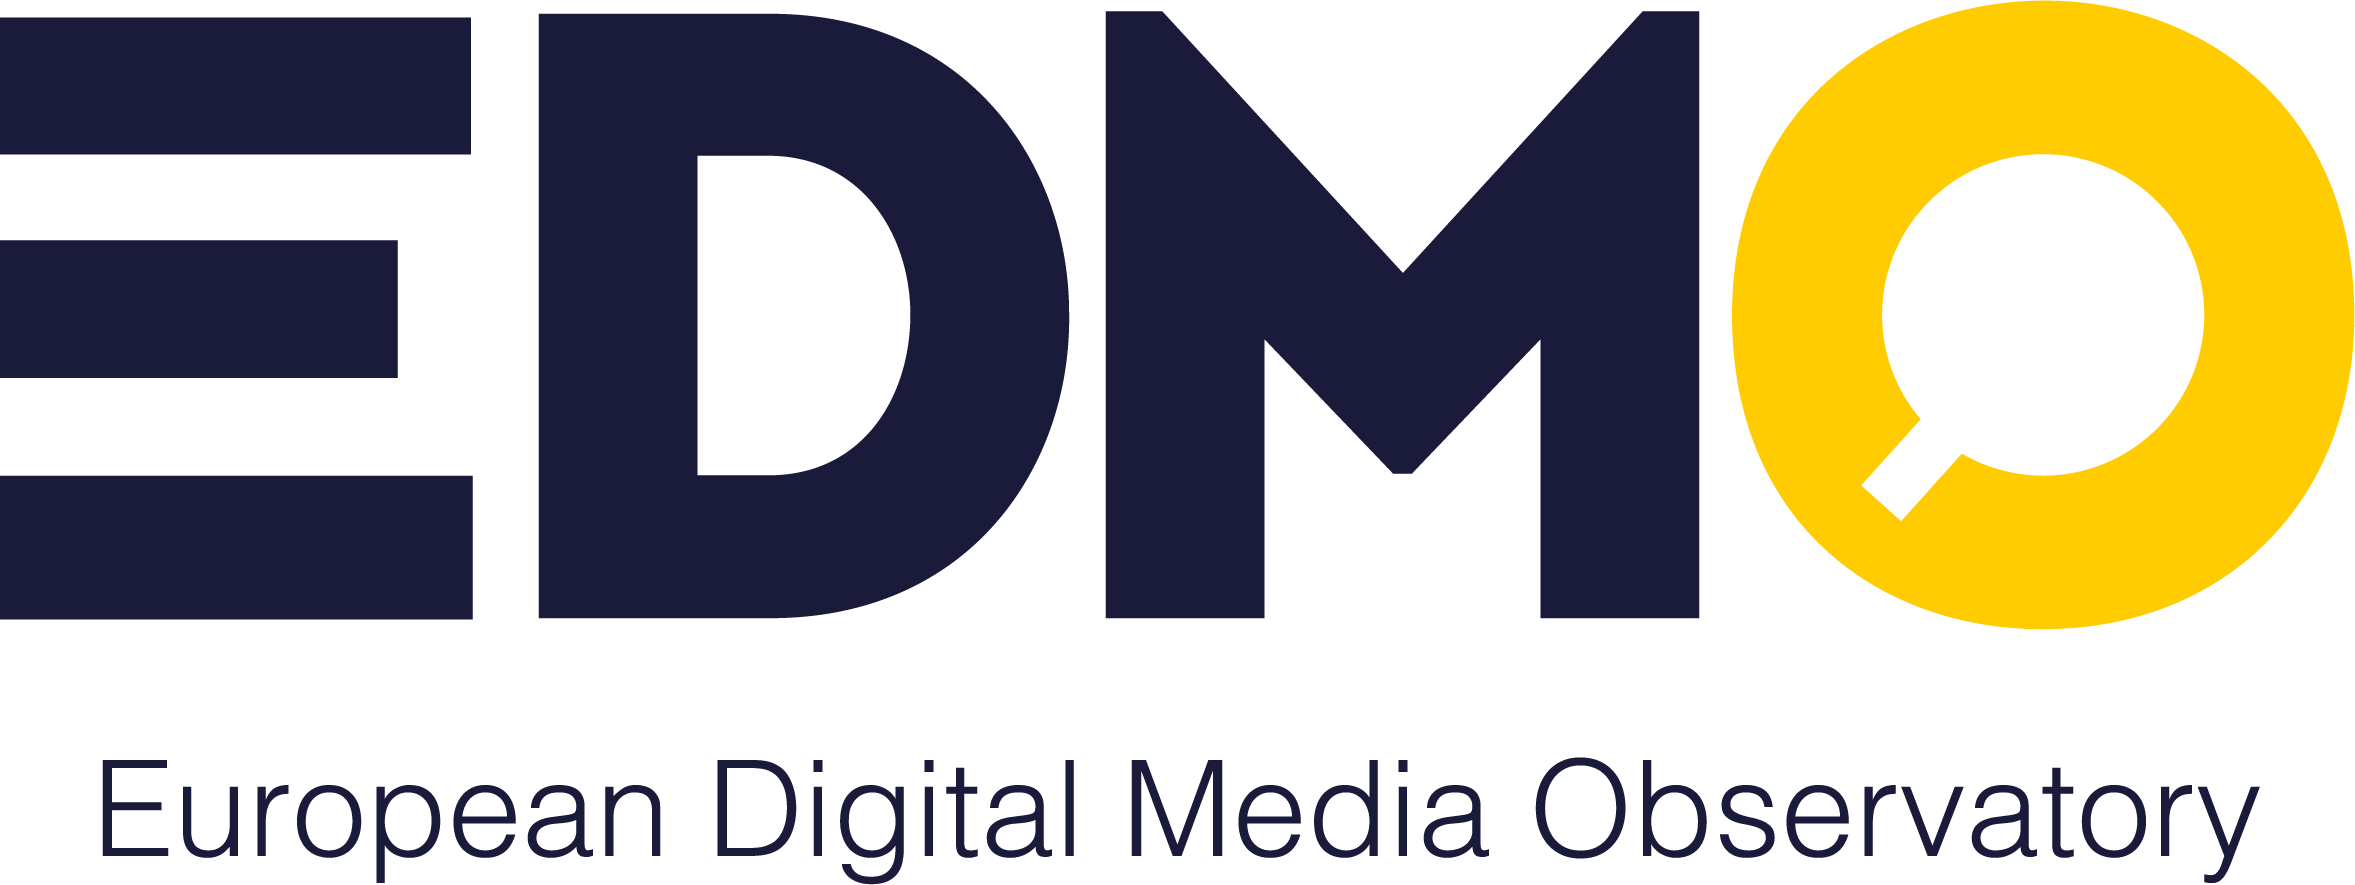 European Digital Media Observatory